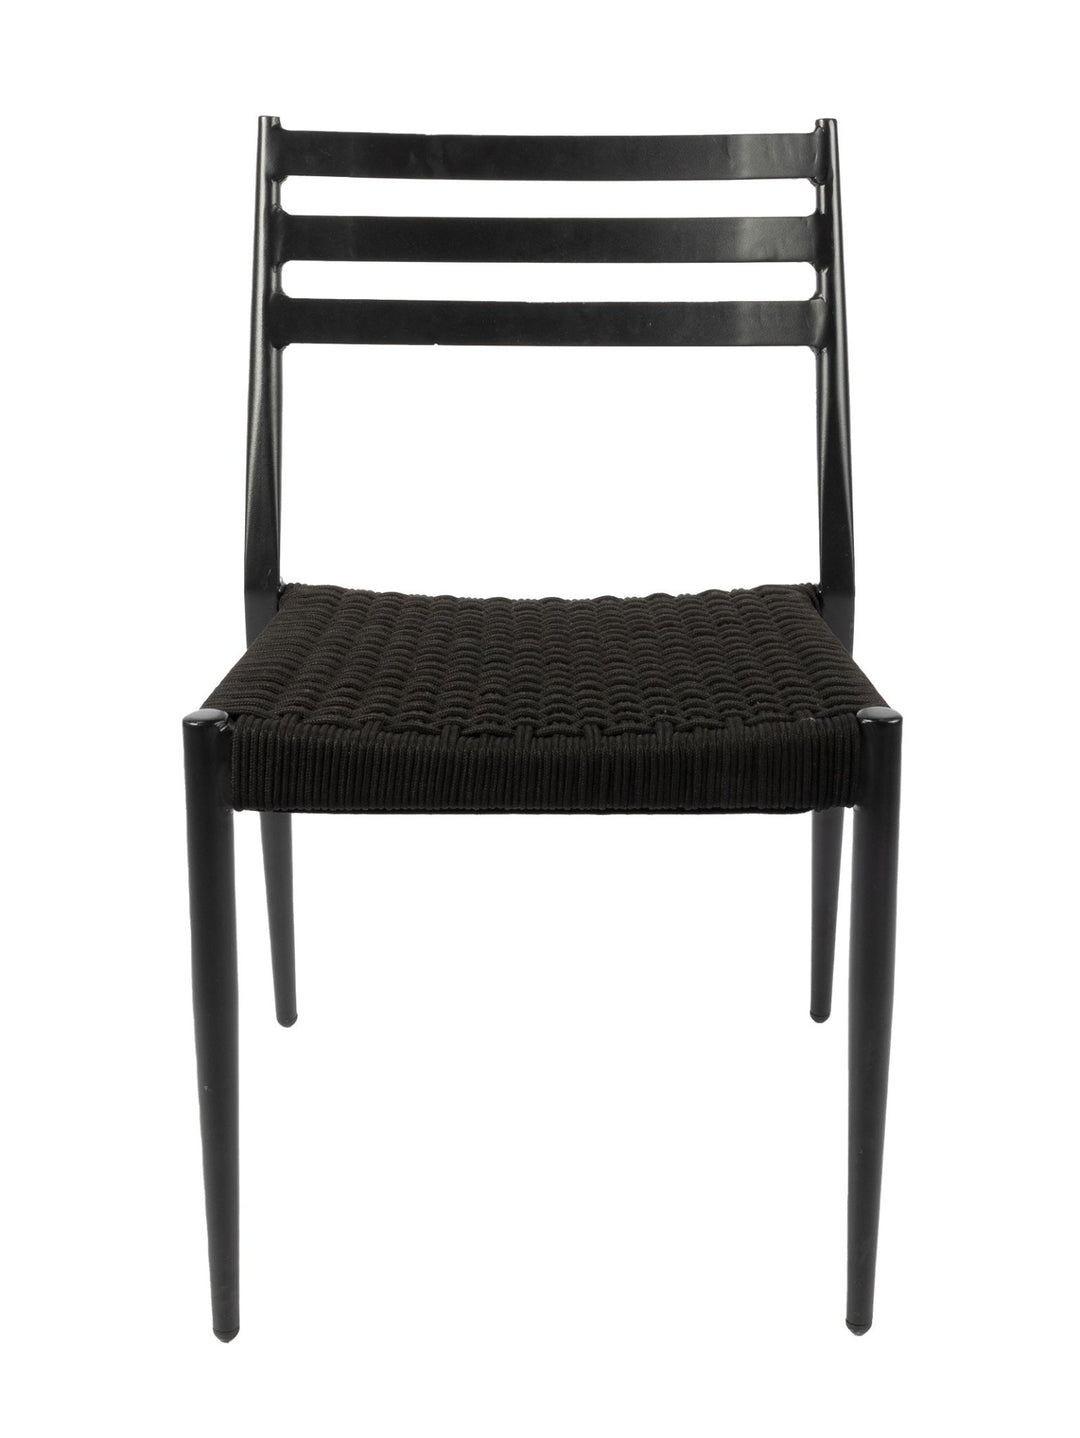 Hermes Outdoor Chair - Chair - Hertex Haus - badge_fully_outdoor